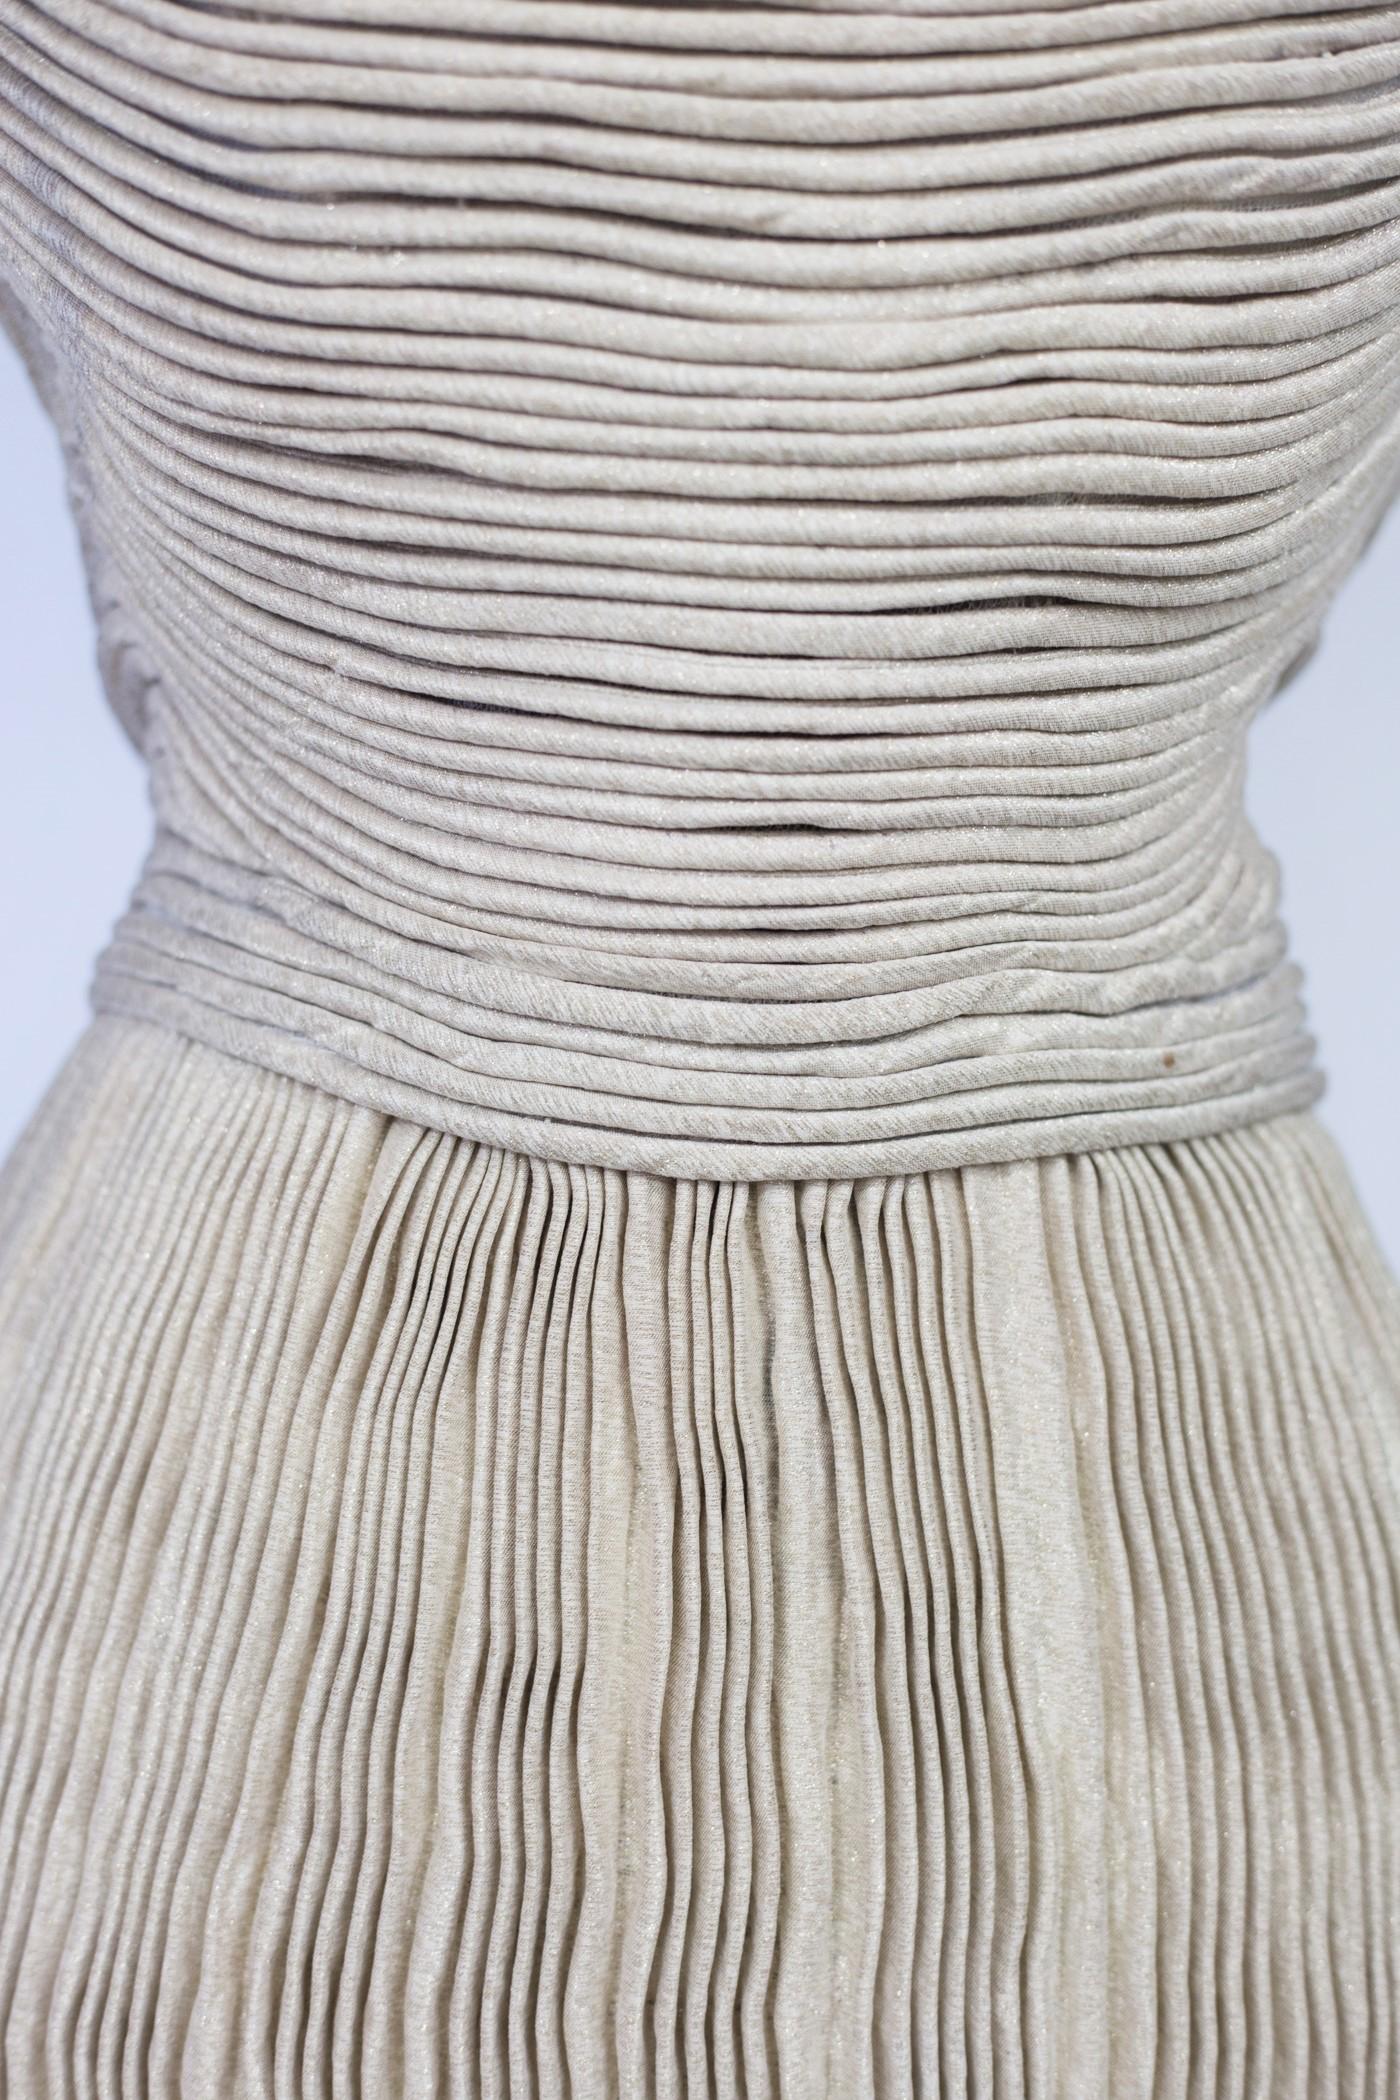 A Silver Lamé Evening Dress by Lucile Manguin - France Haute Couture Circa 1940 For Sale 5